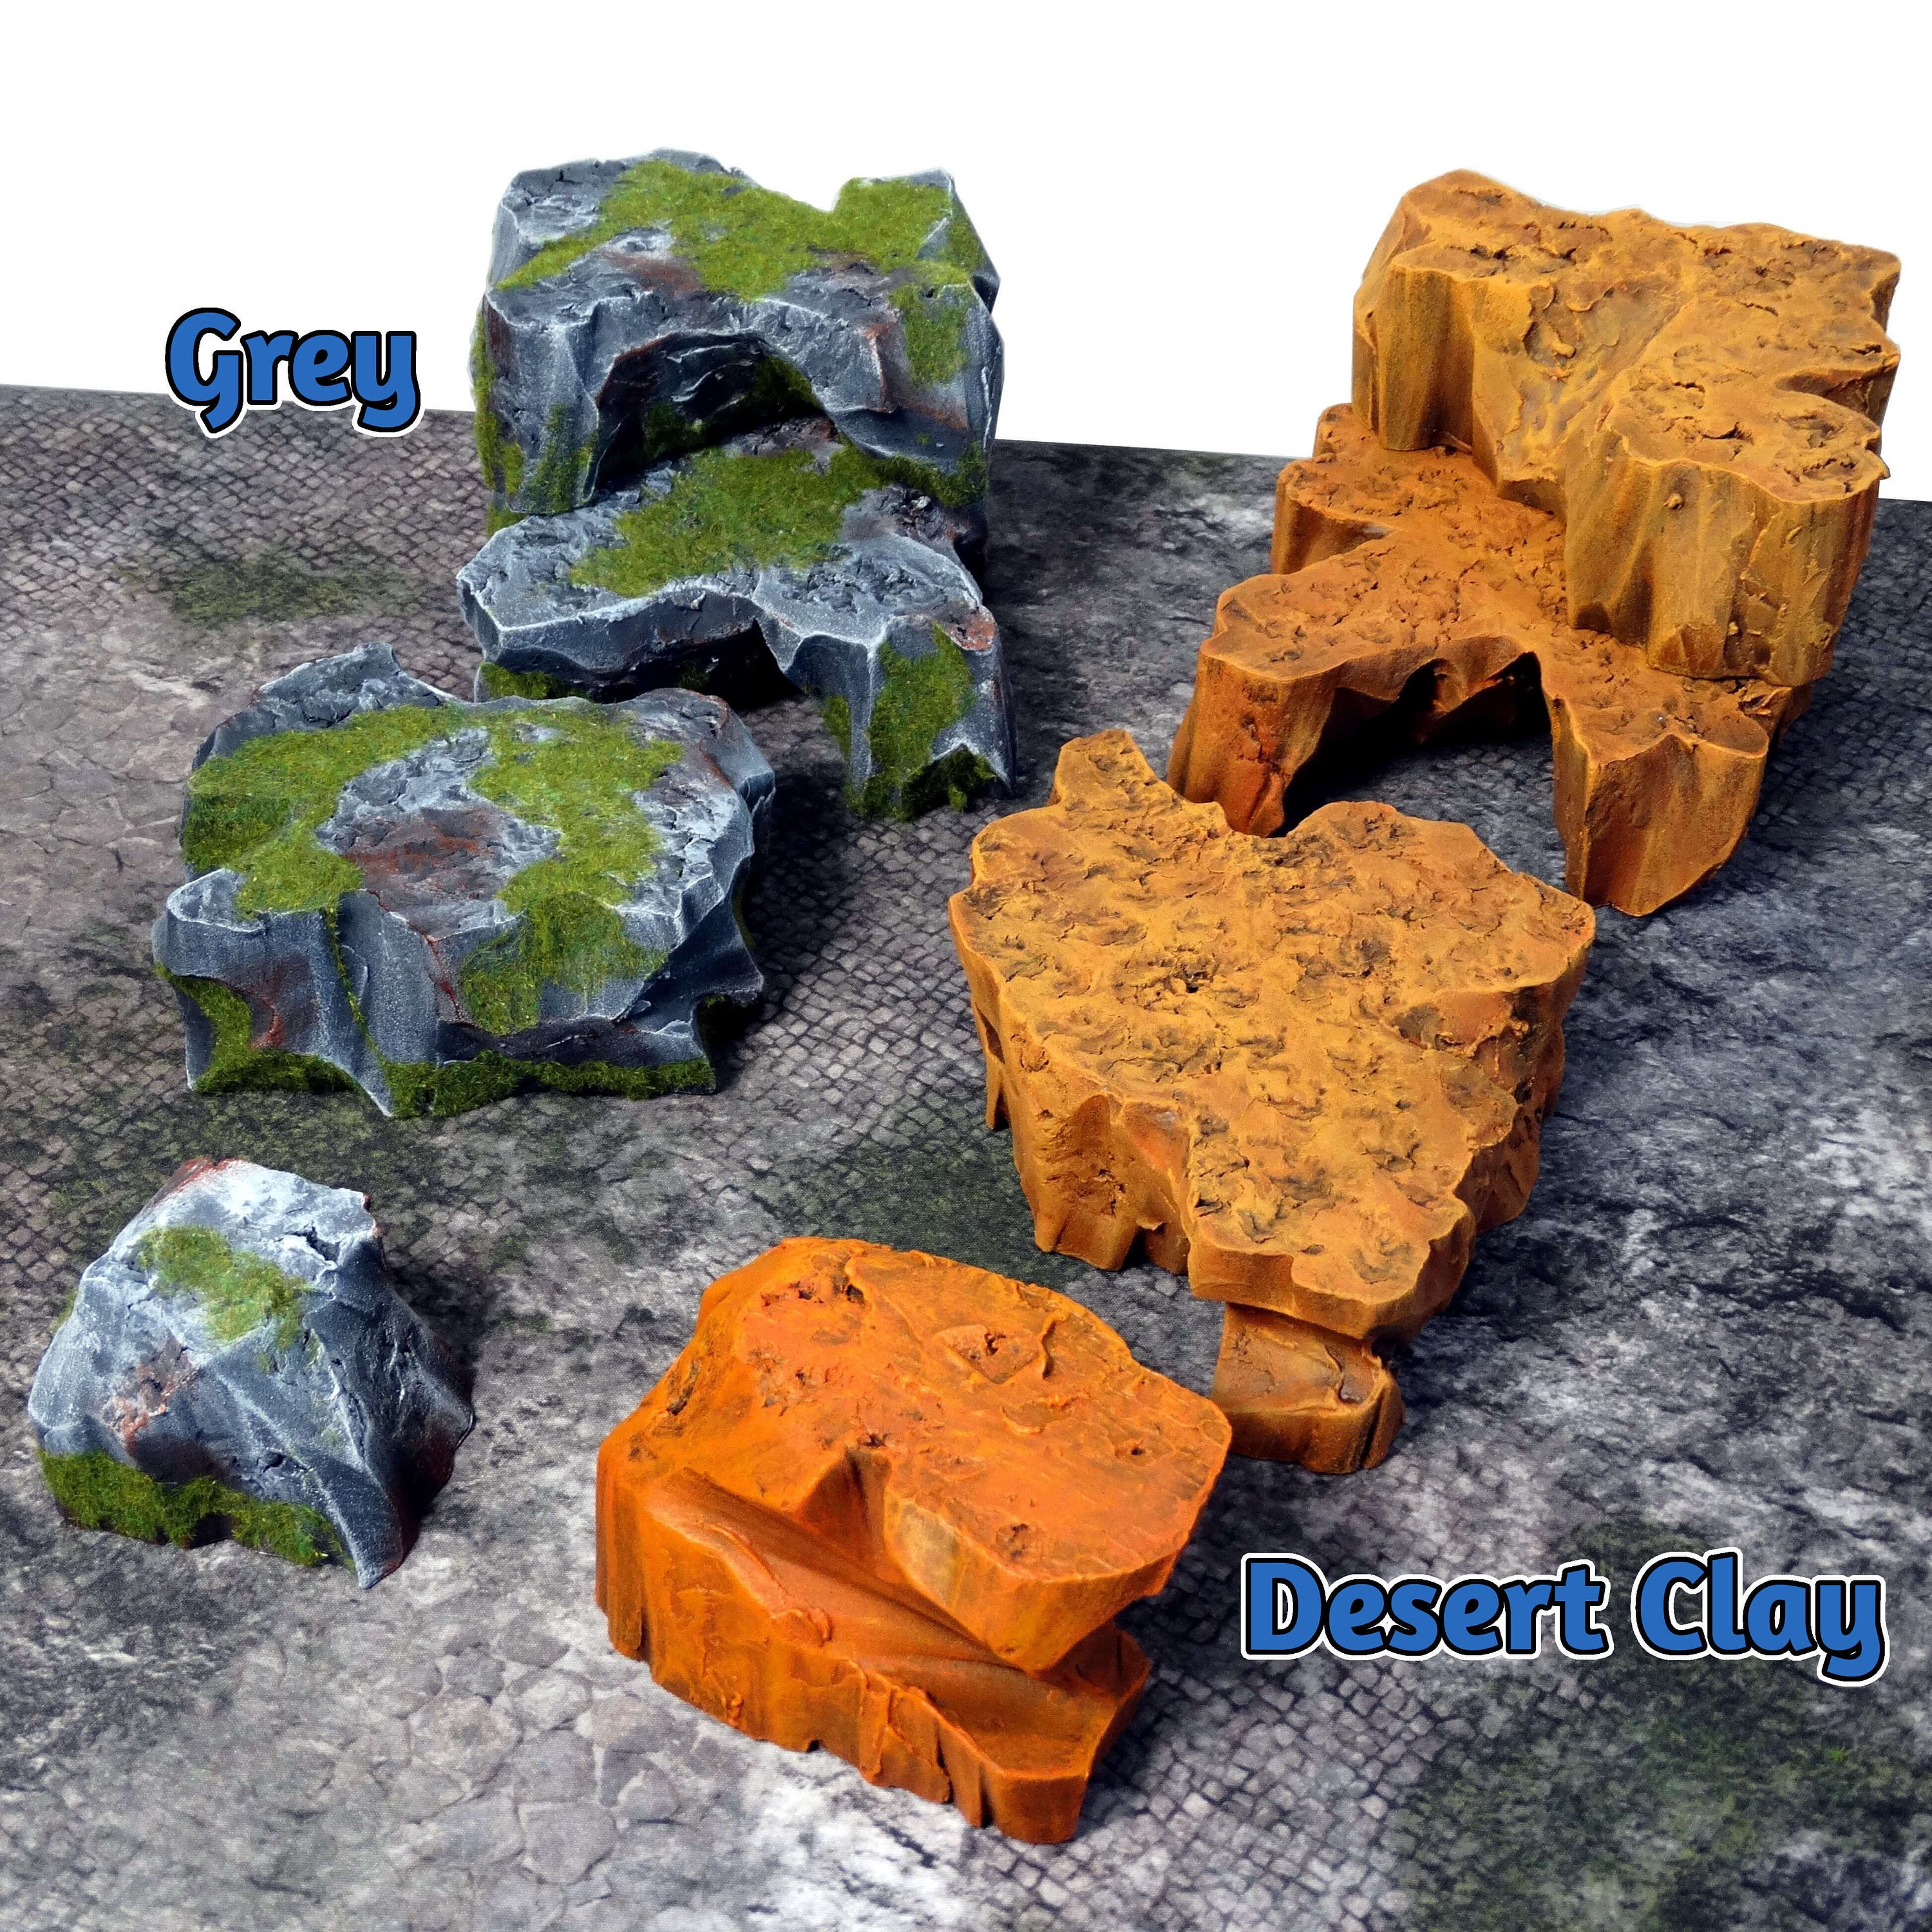 Warmtree Miniature Rock Pebble Basing Kit Tabletop Layout Terrain Scenery Landscape Model Railroad Sand Table Material, Pack of 3